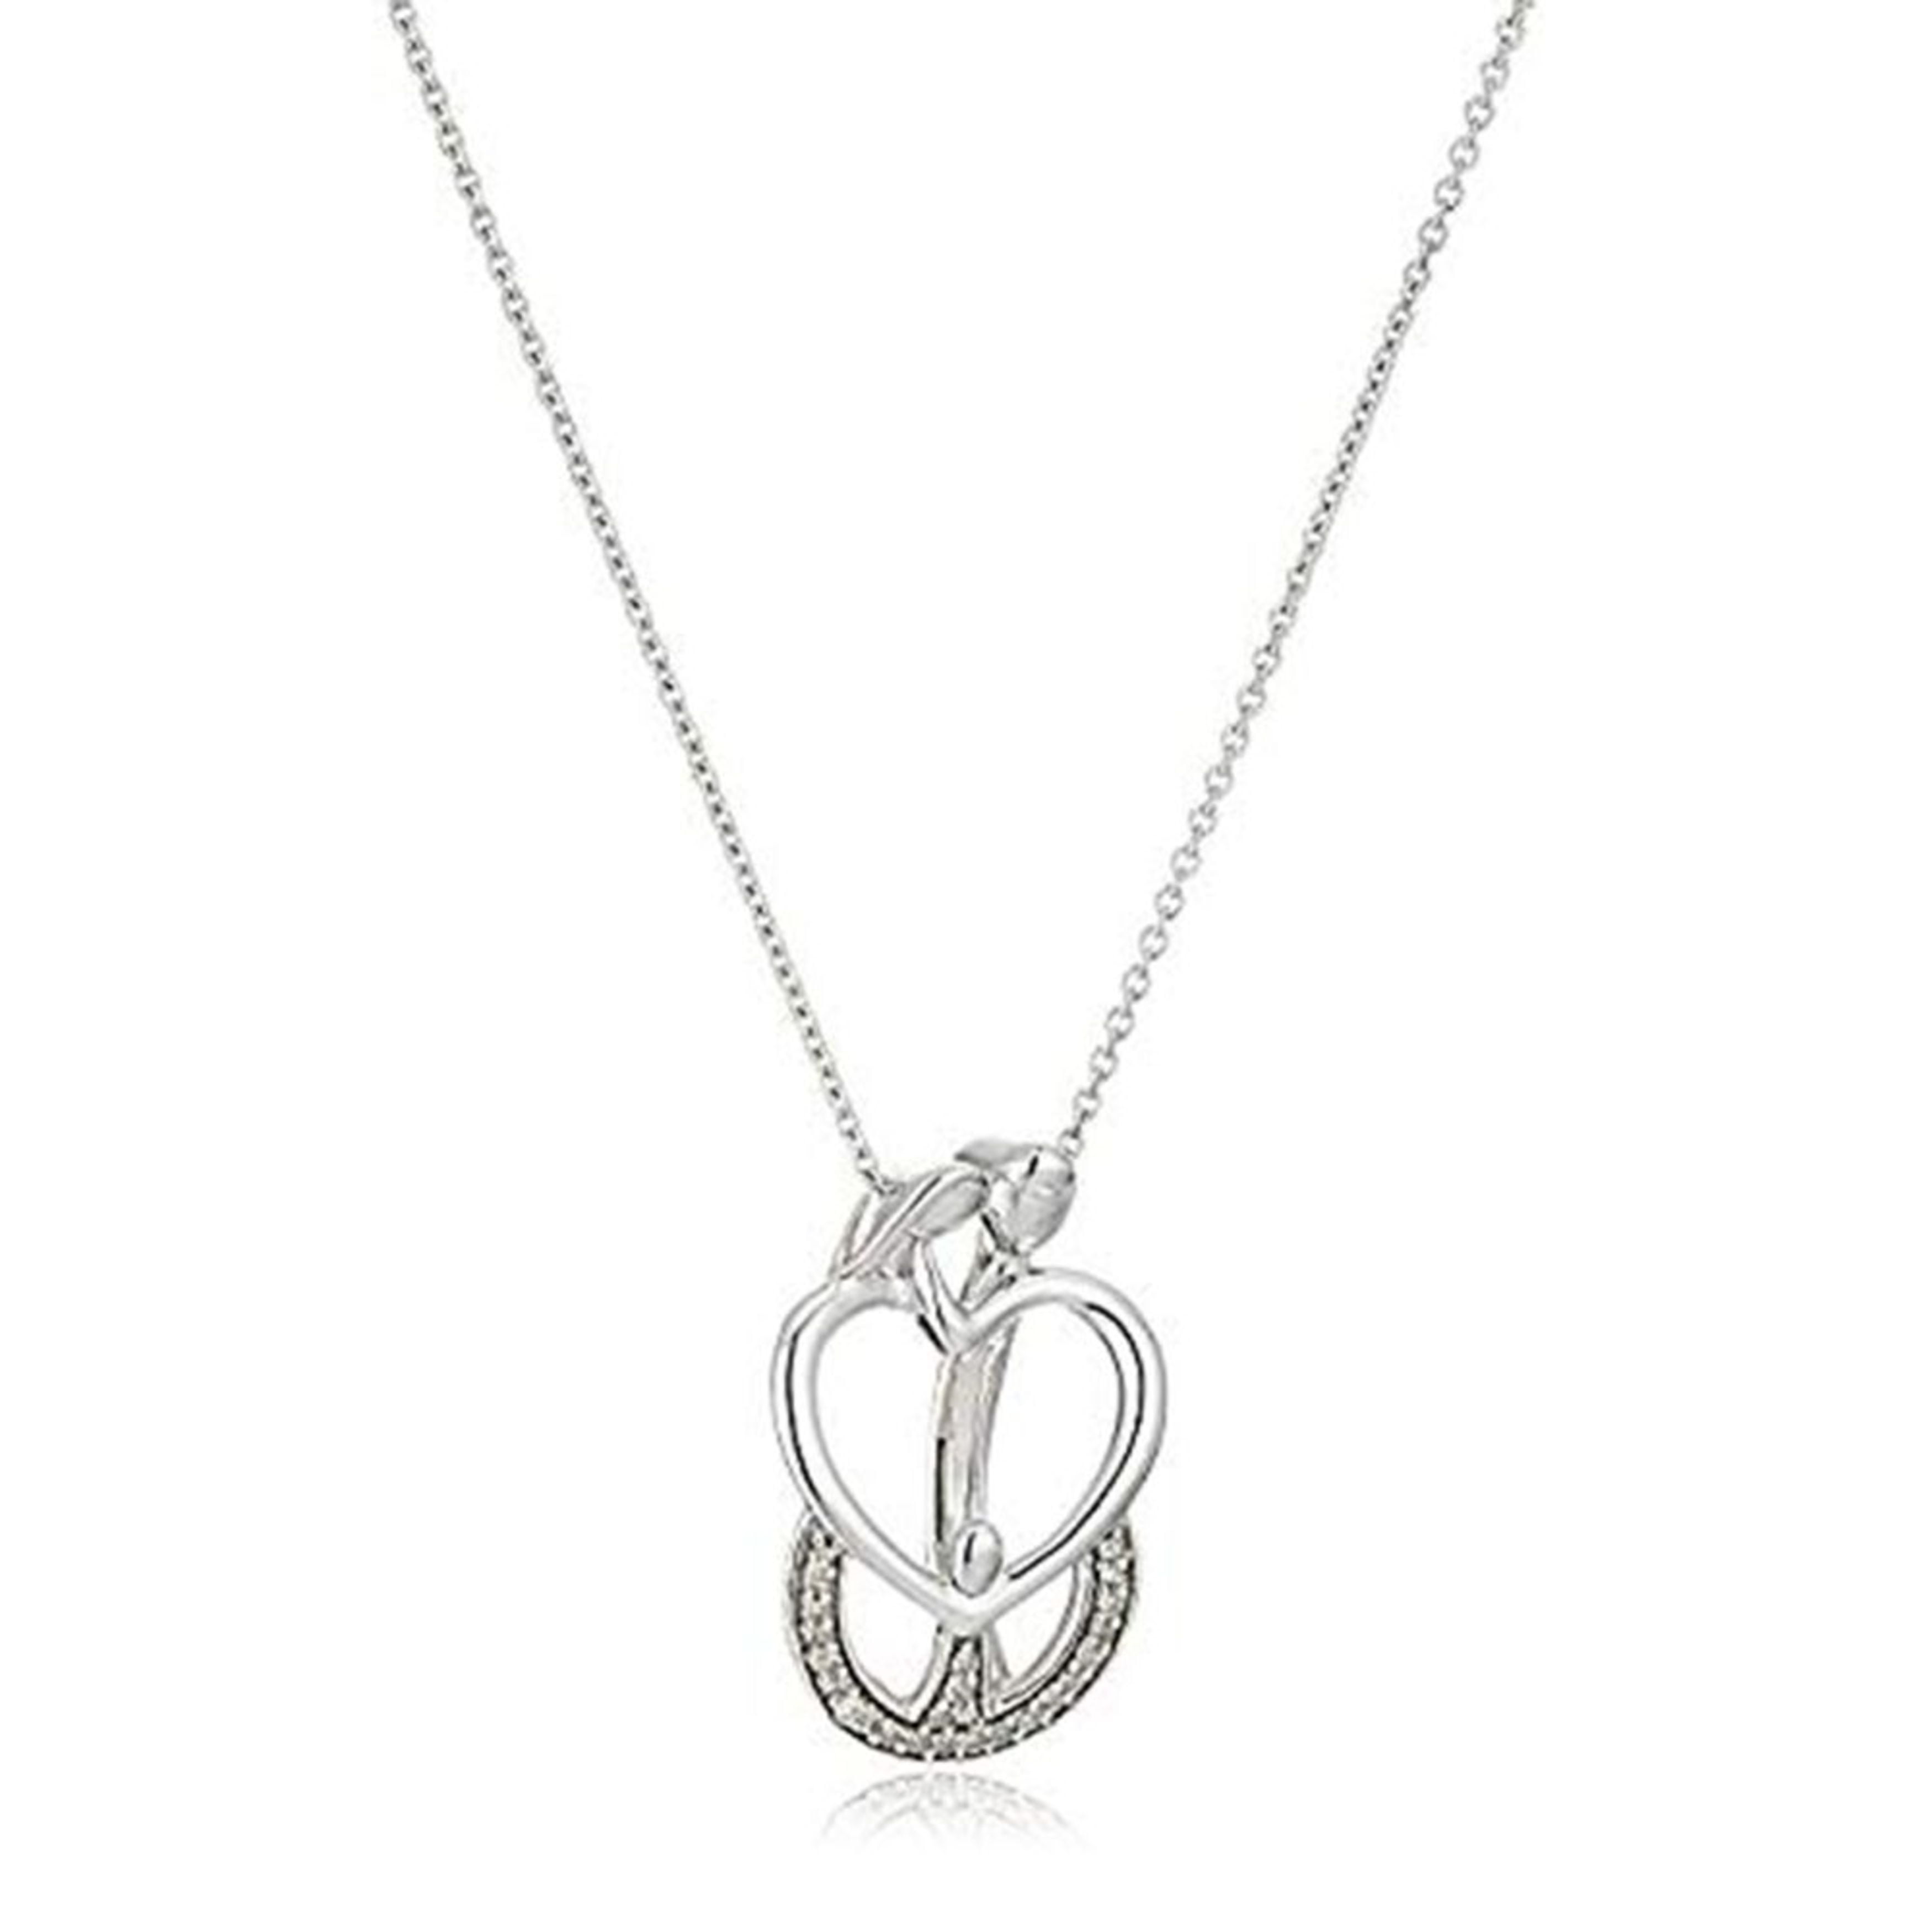 Jewelili Sterling Silver Diamond Accent Double Heart Pendant Necklace 18 